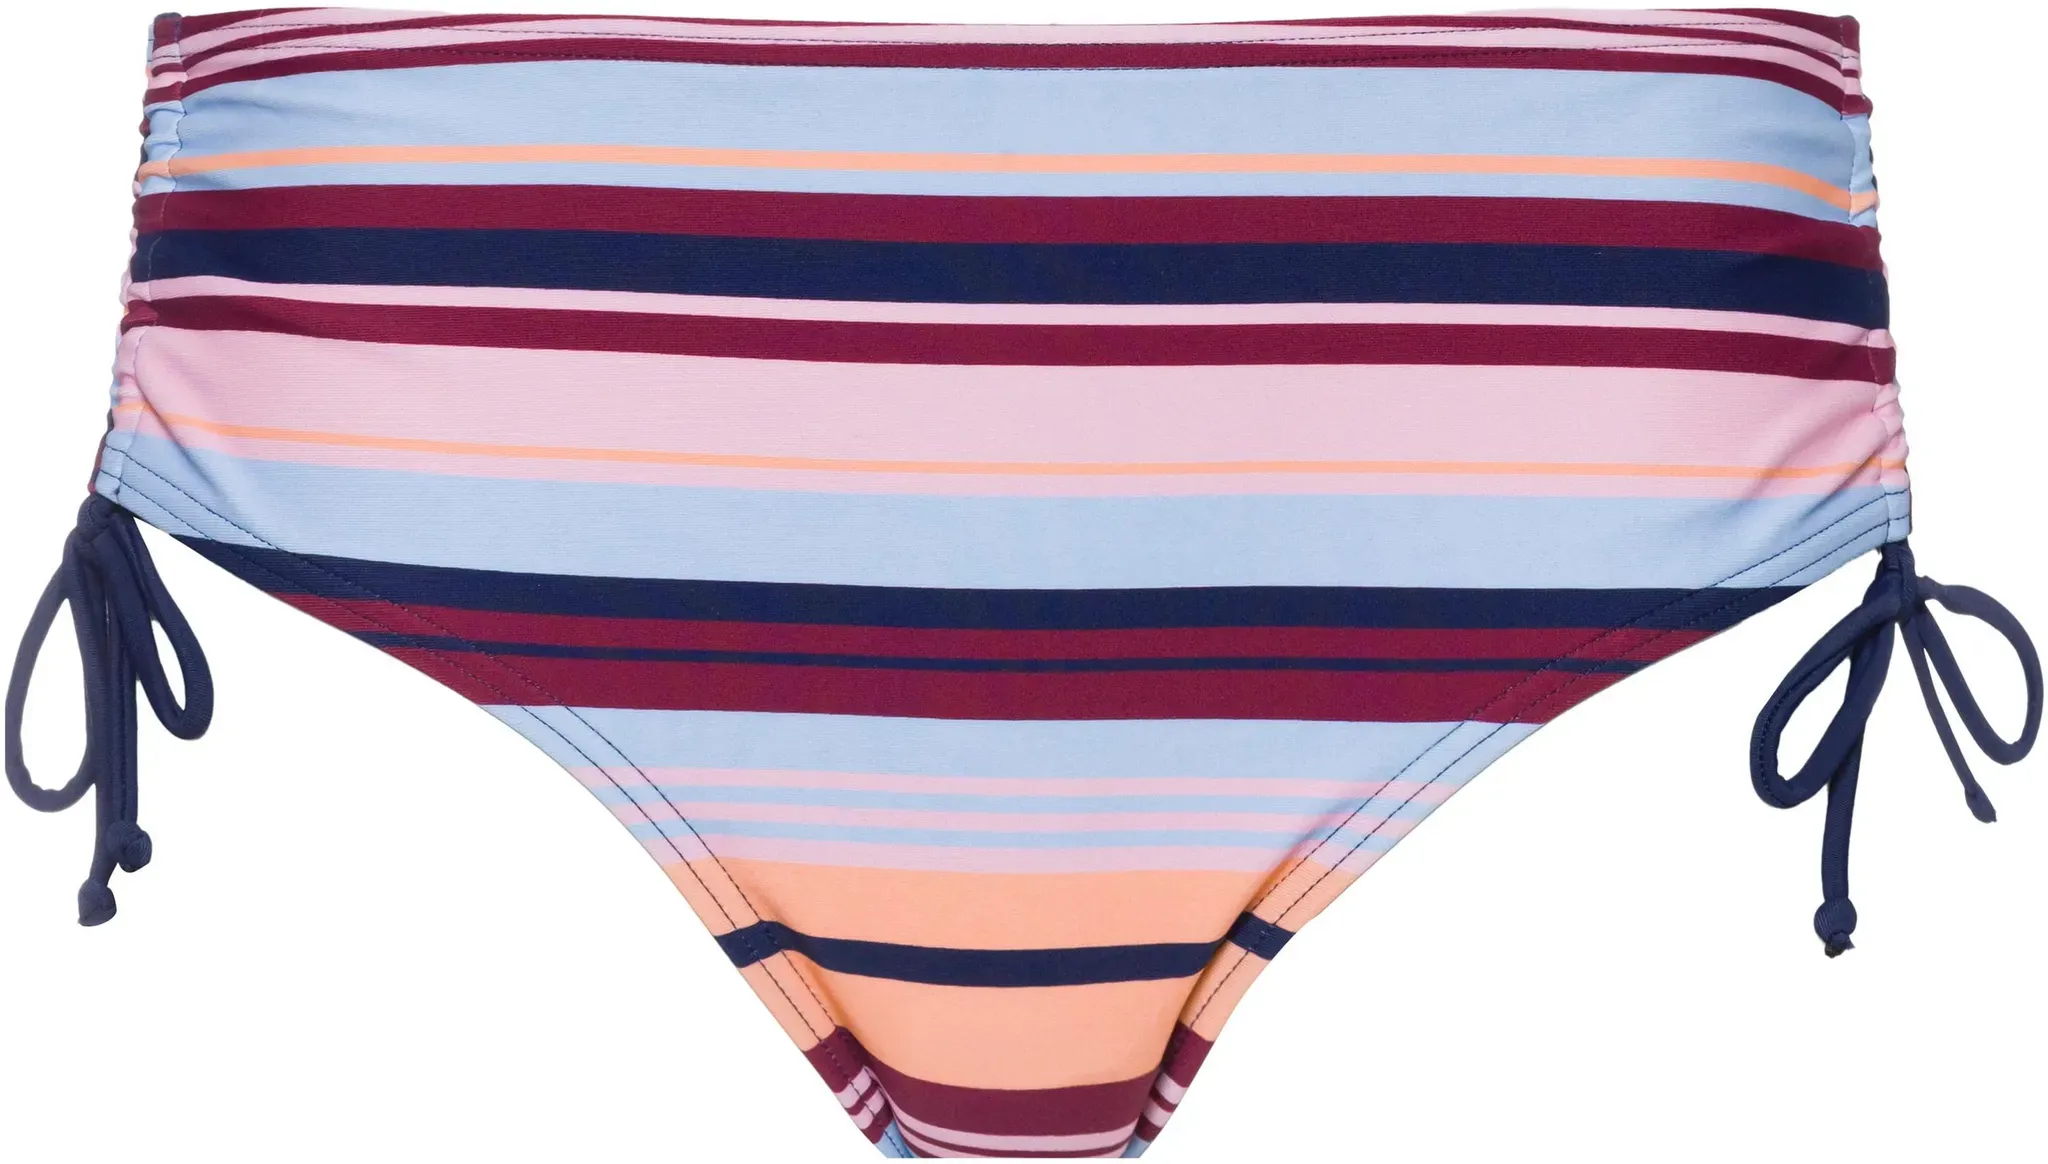 S.OLIVER Bikini Hose Damen in marine-rosé gestreift, Größe 36 - bunt